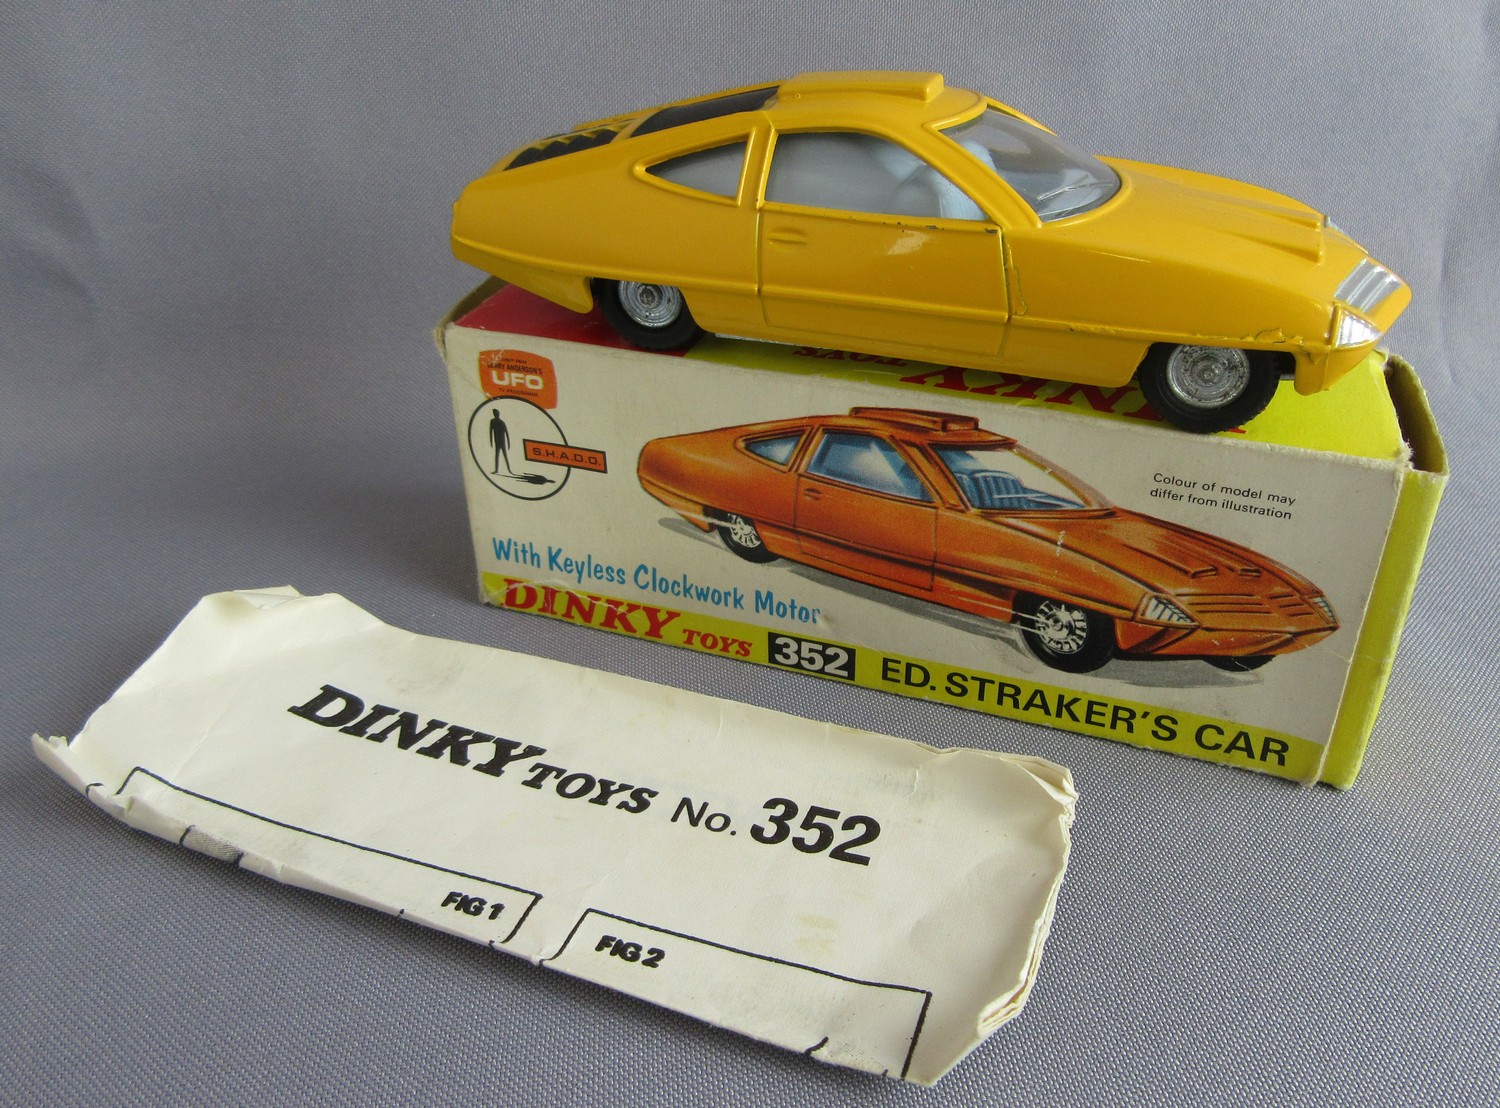 Dinky Toys Spain Archives - Auto Jaune Blog